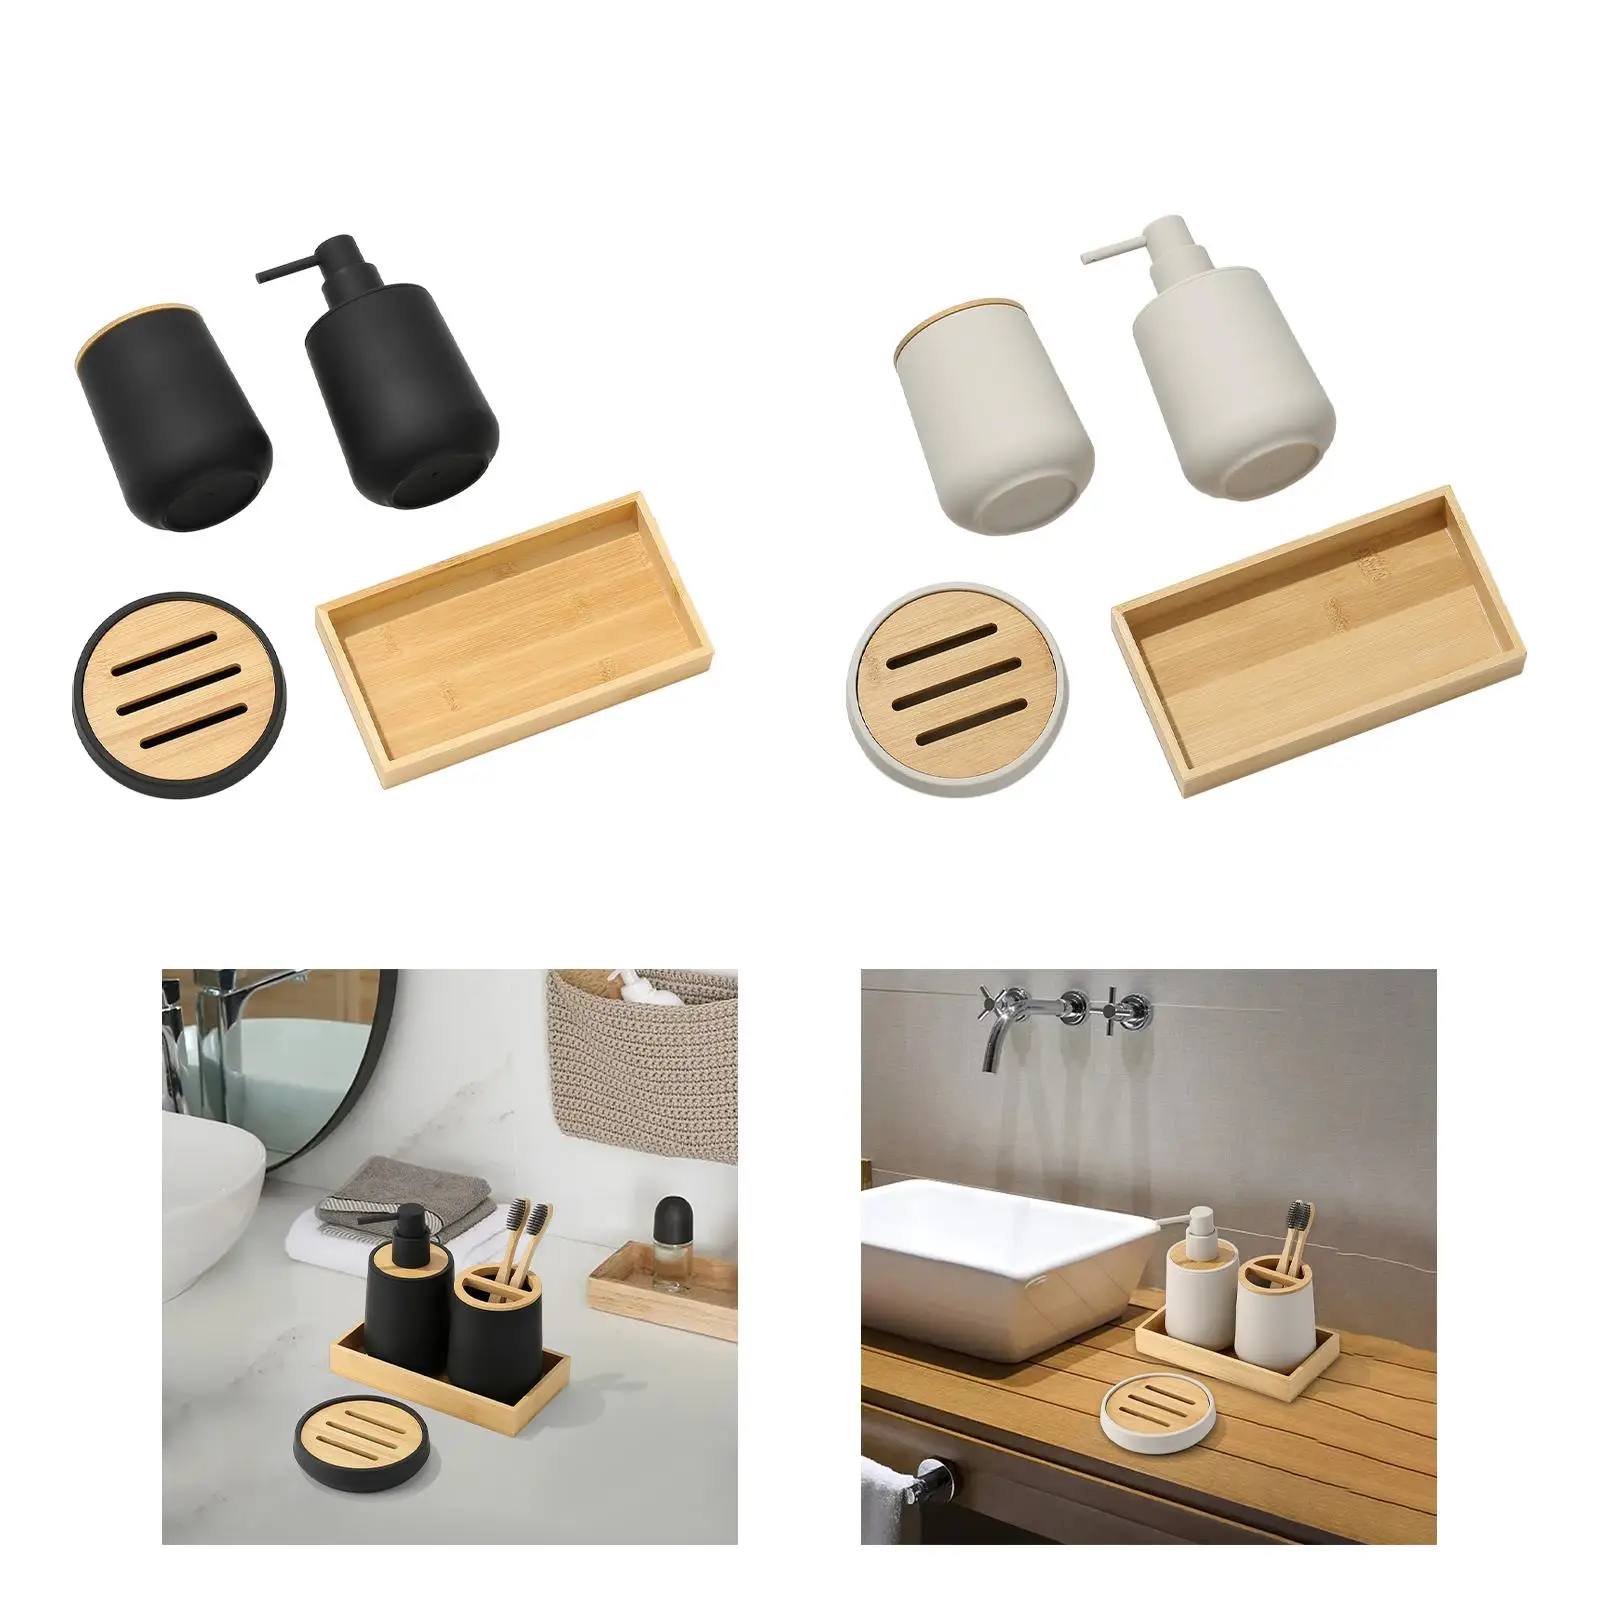 4 Pieces Bathroom Accessories Set Collection for Homes, Hotels Complete Set Countertop Decoration Bath Set Stylish Design